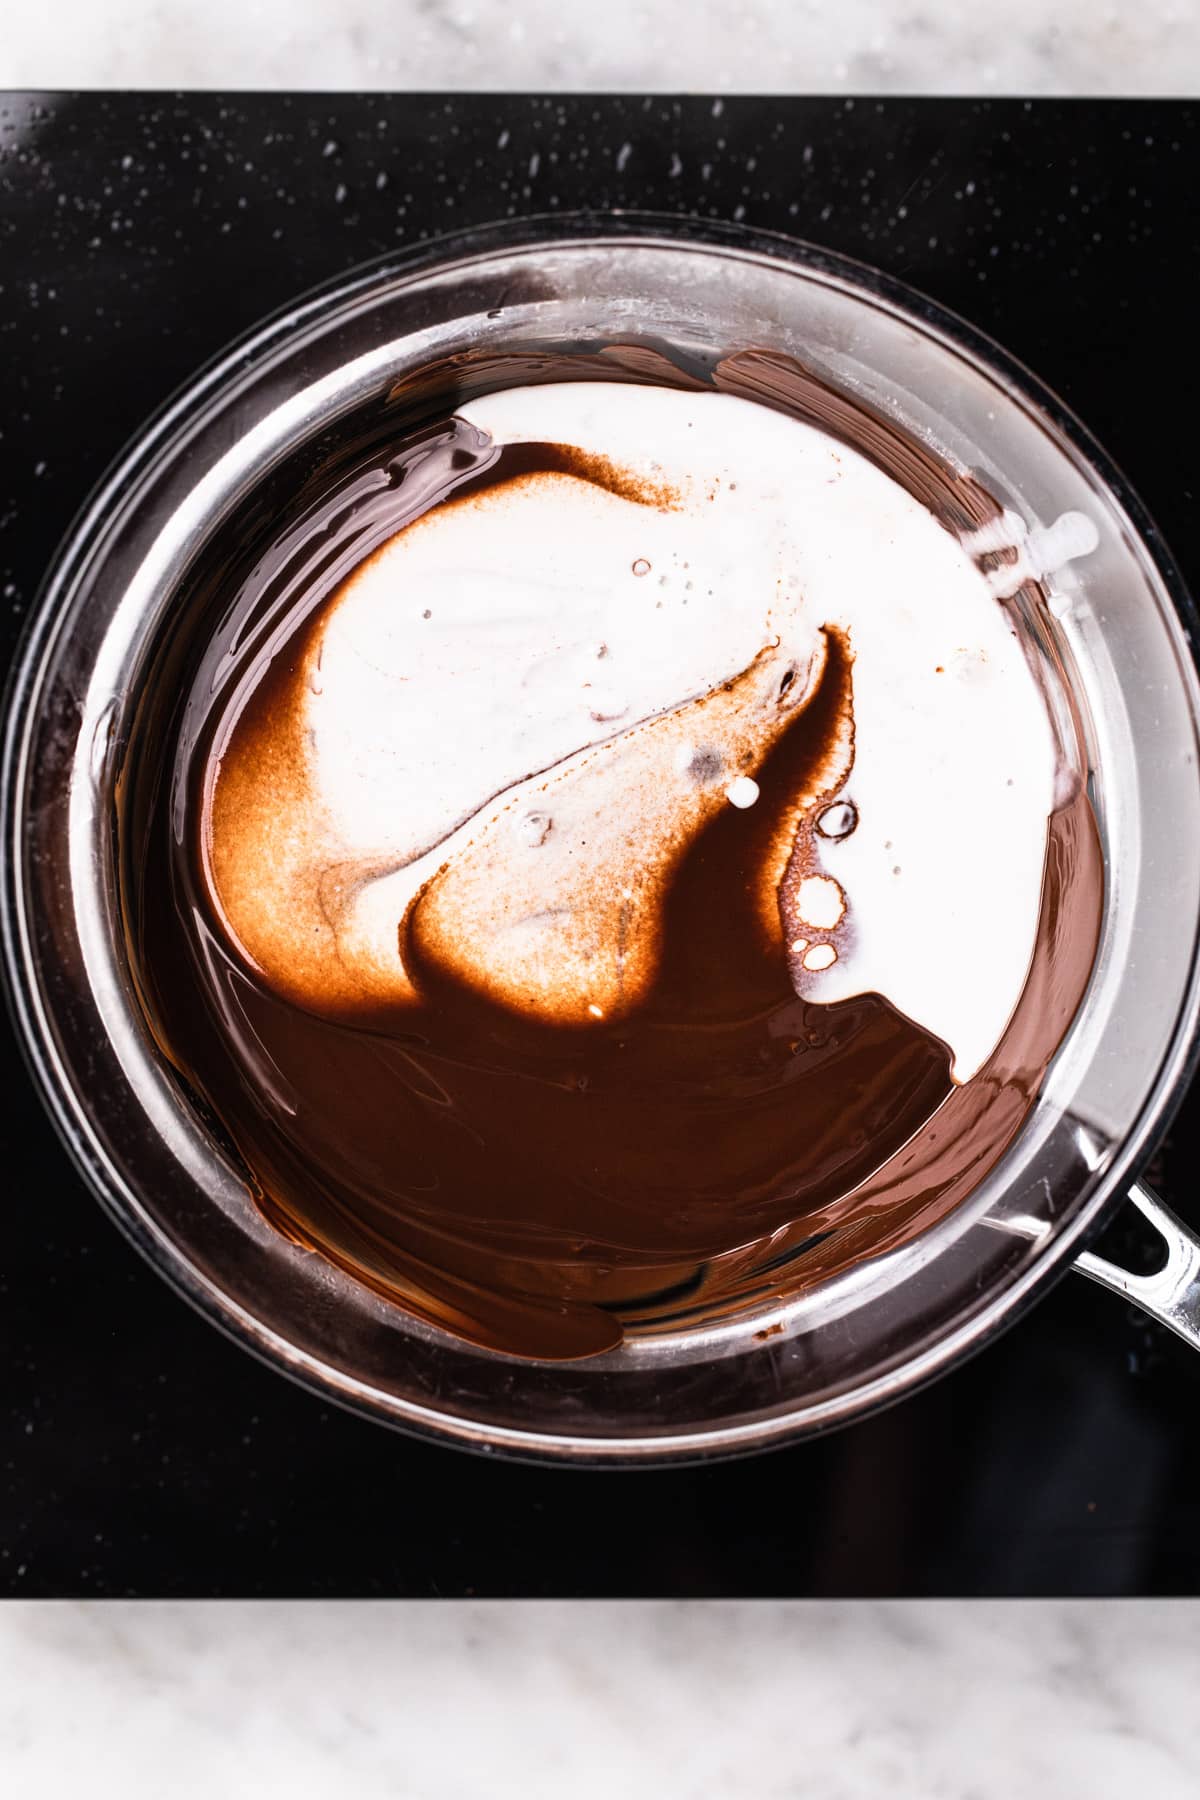 Dark chocolate and coconut milk mixing together to make vegan chocolate ganache.